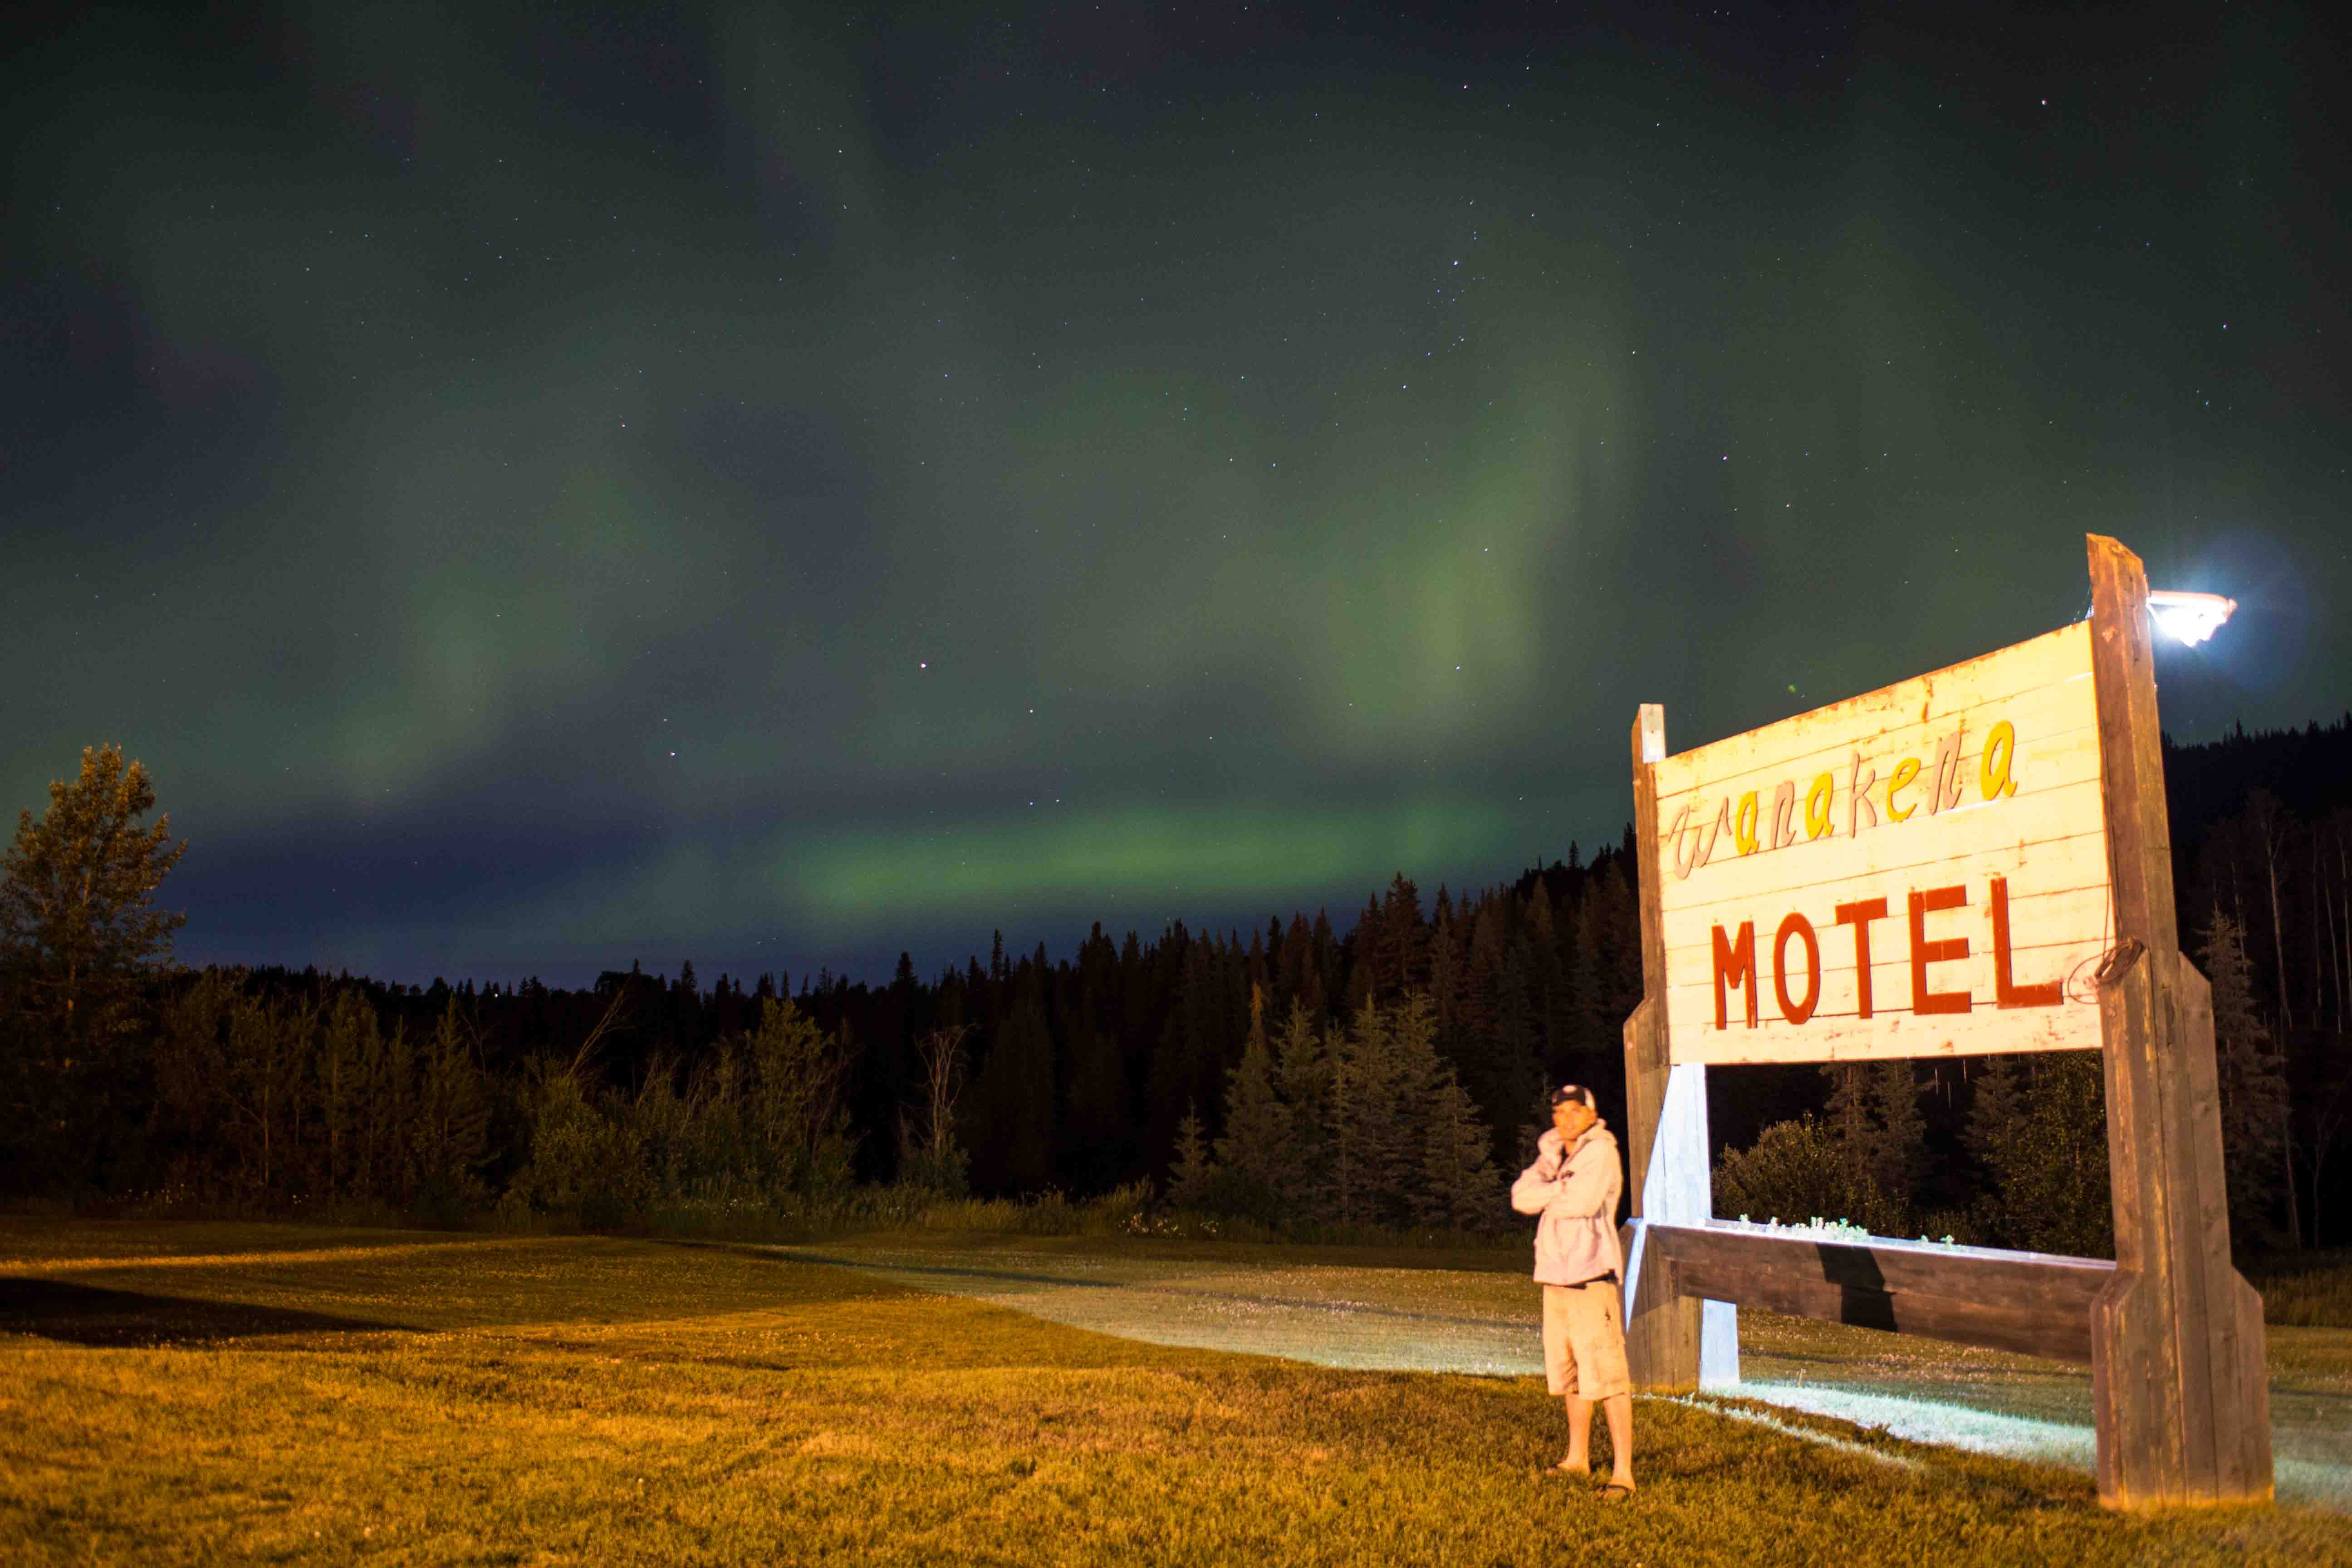 Seeing the Northern Lights in Burns Lake, British Columbia